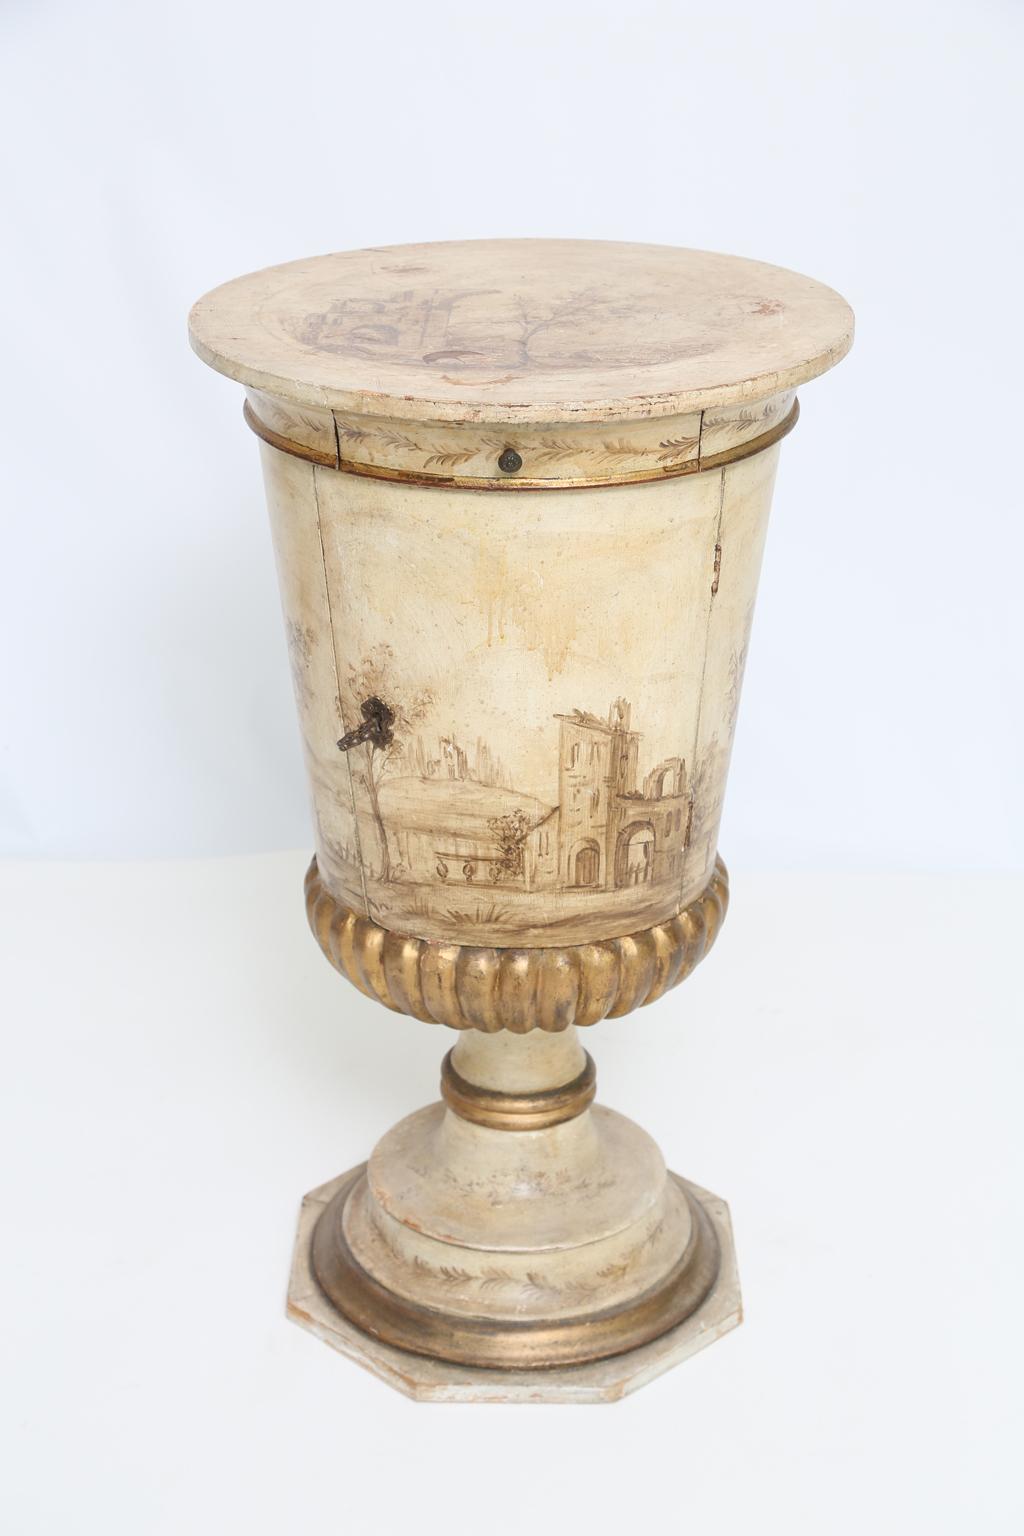 Painted Venetian Pot Stand Pedestal Table 6